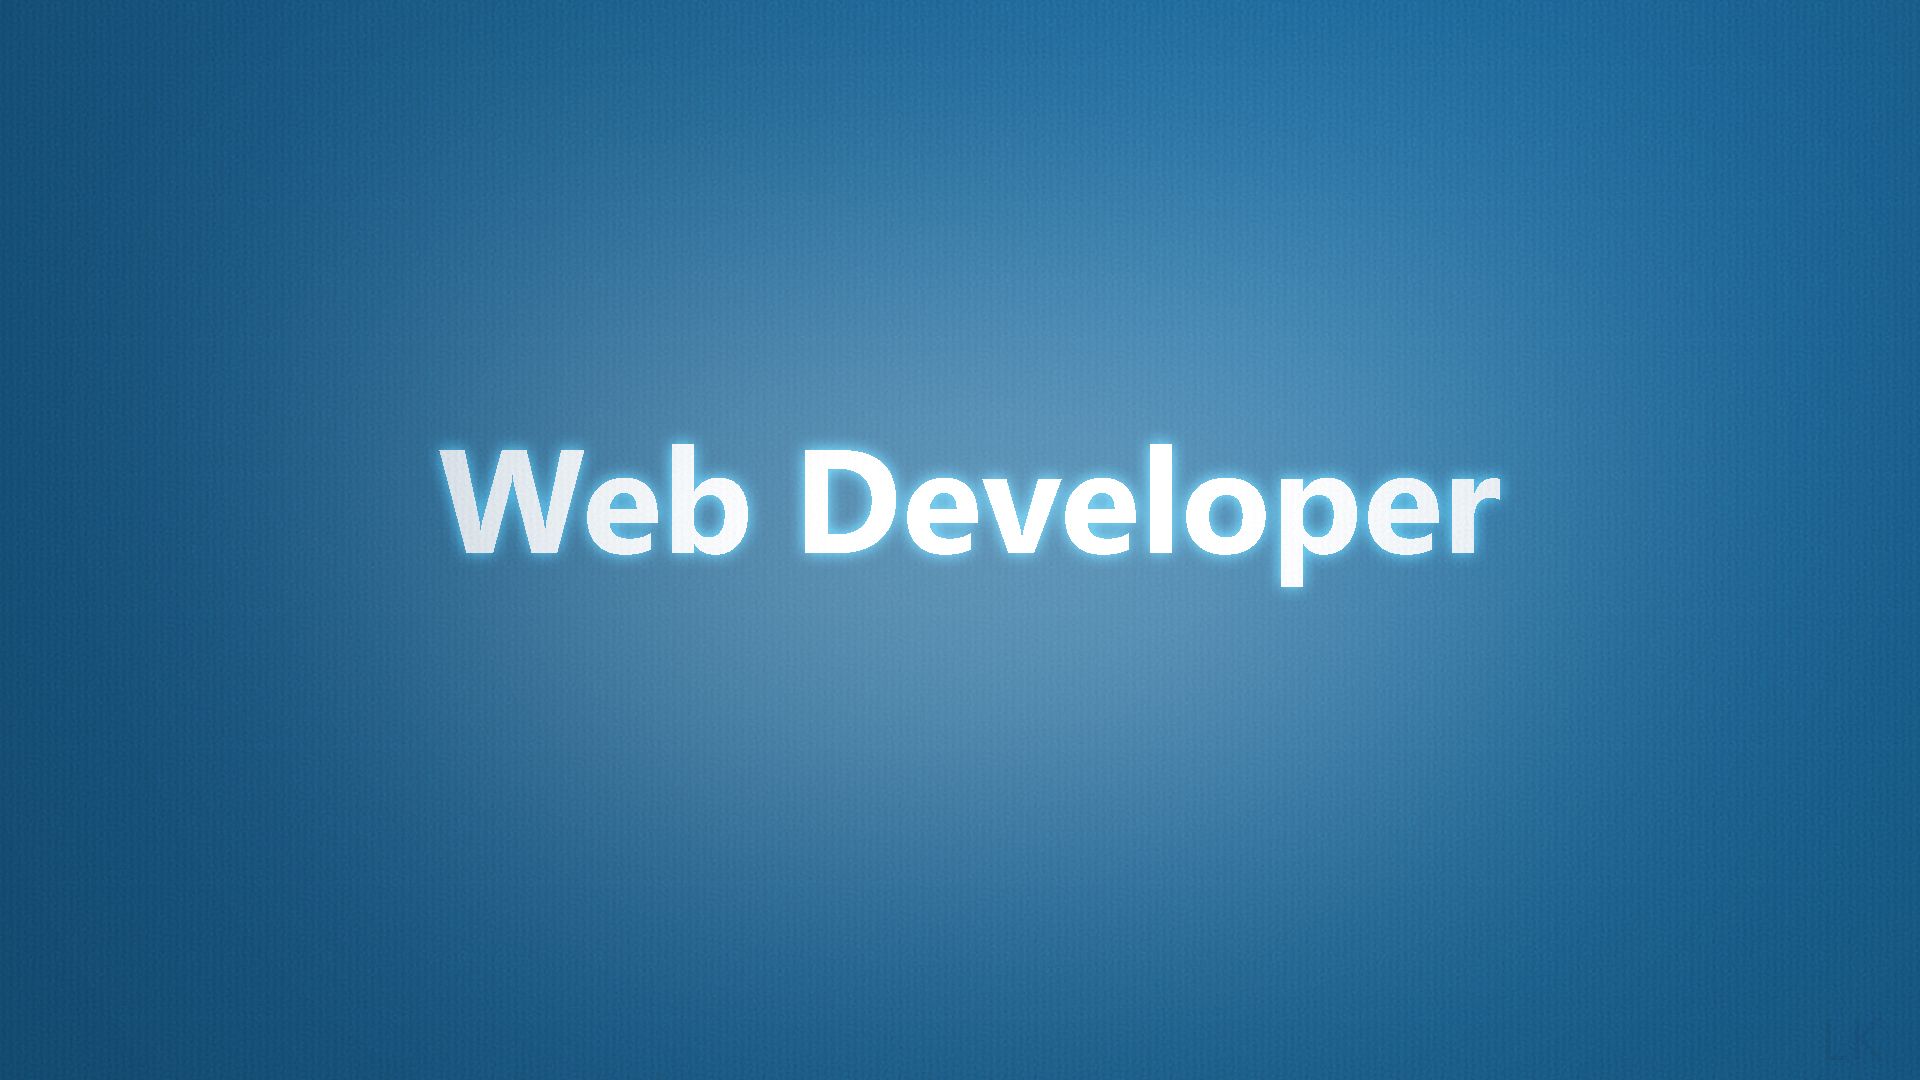 Web Developer Background. Spider Web